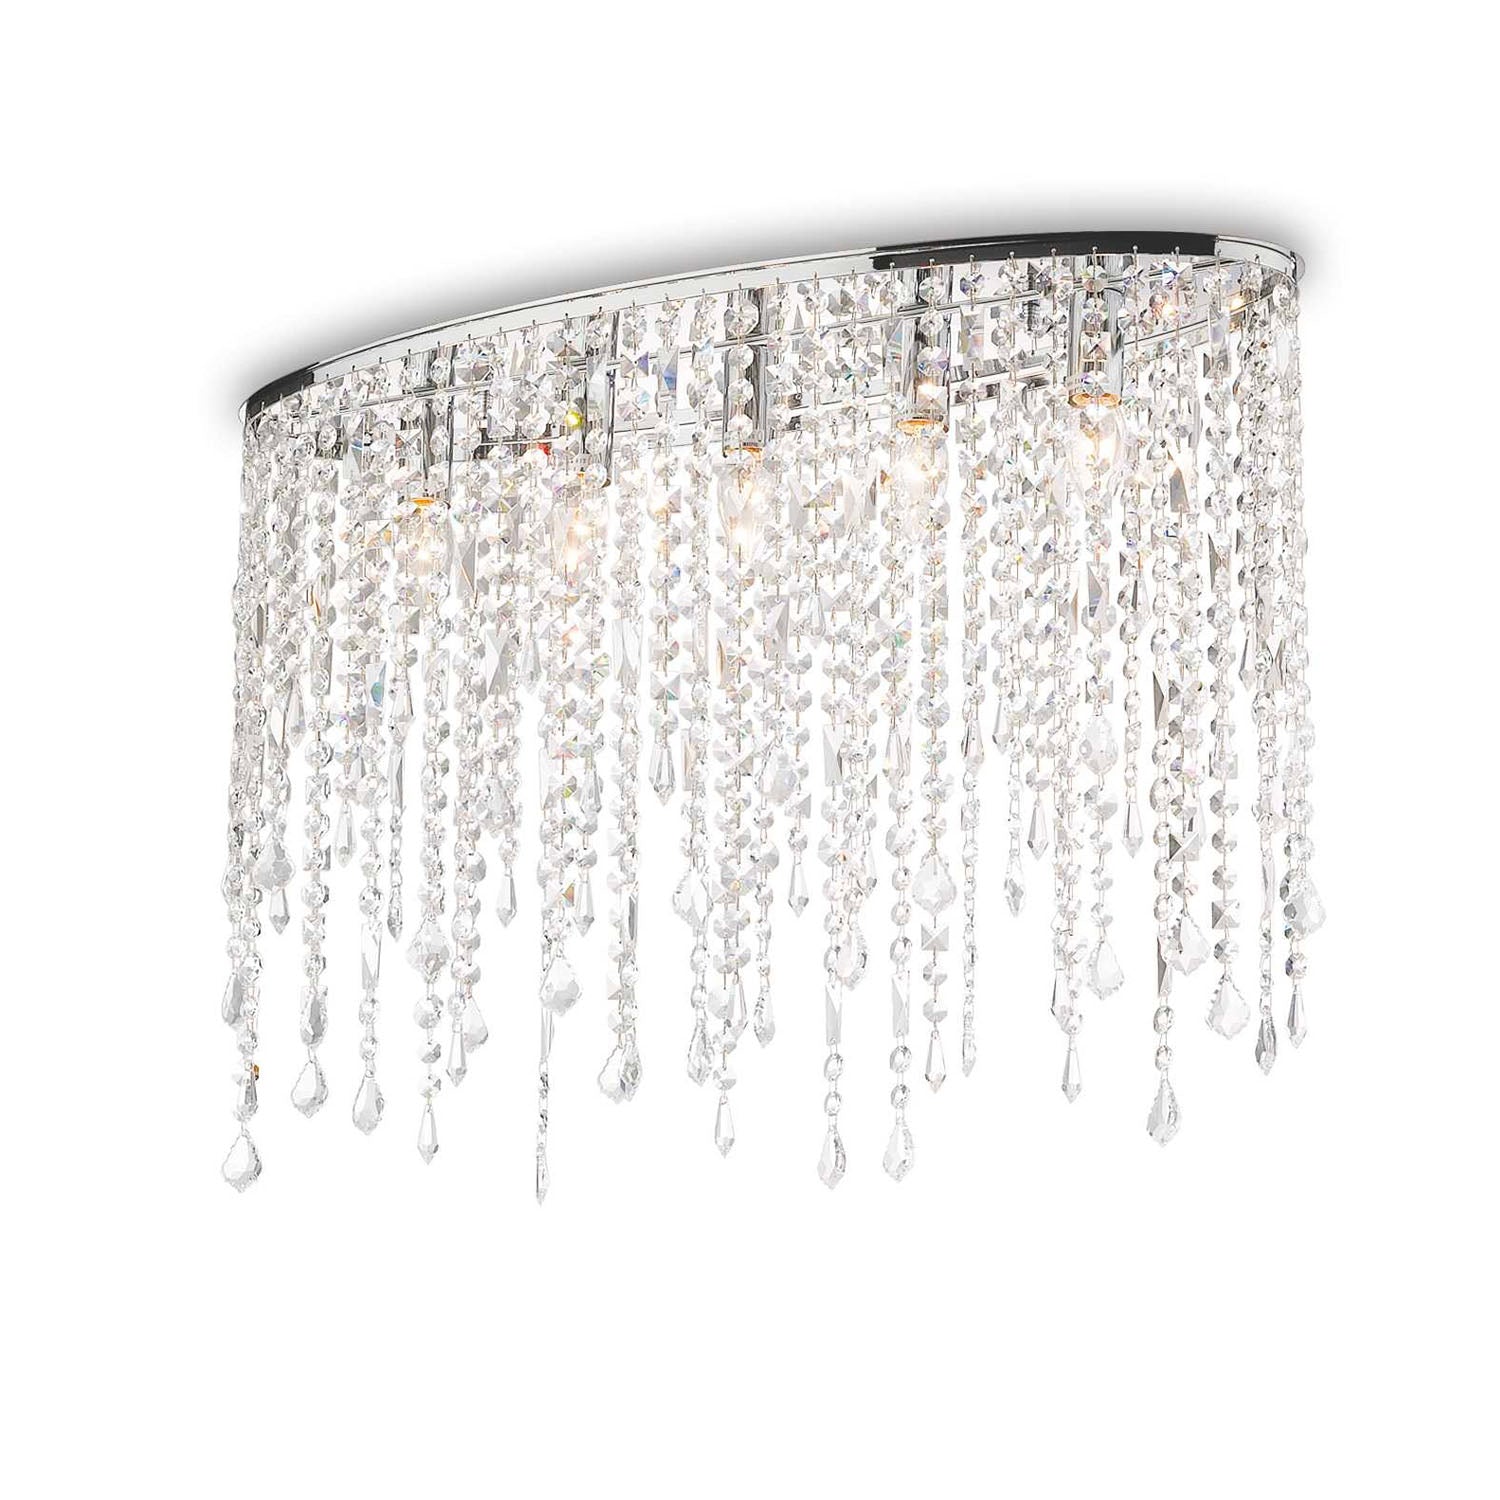 RAIN - Chrome ceiling light with crystal drops